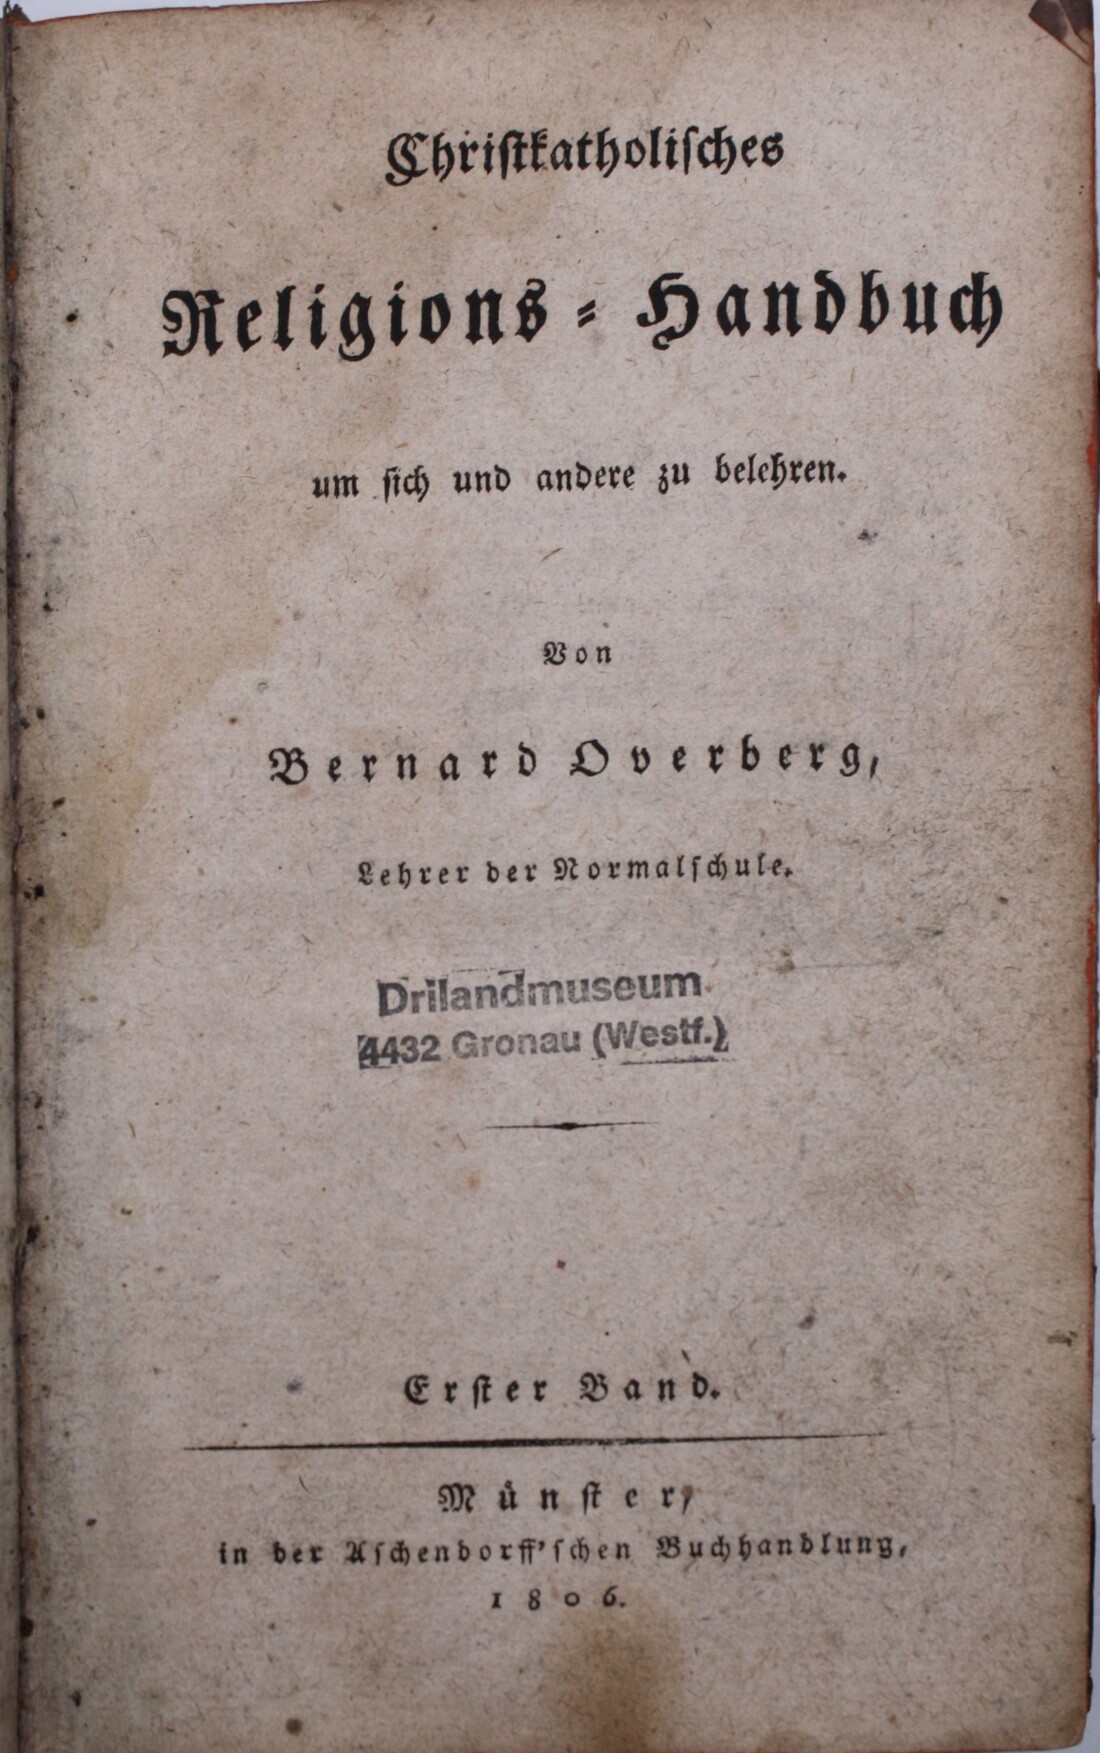 Buch: Christkatholisches Religions-Handbuch (Drilandmuseum CC BY-NC-SA)